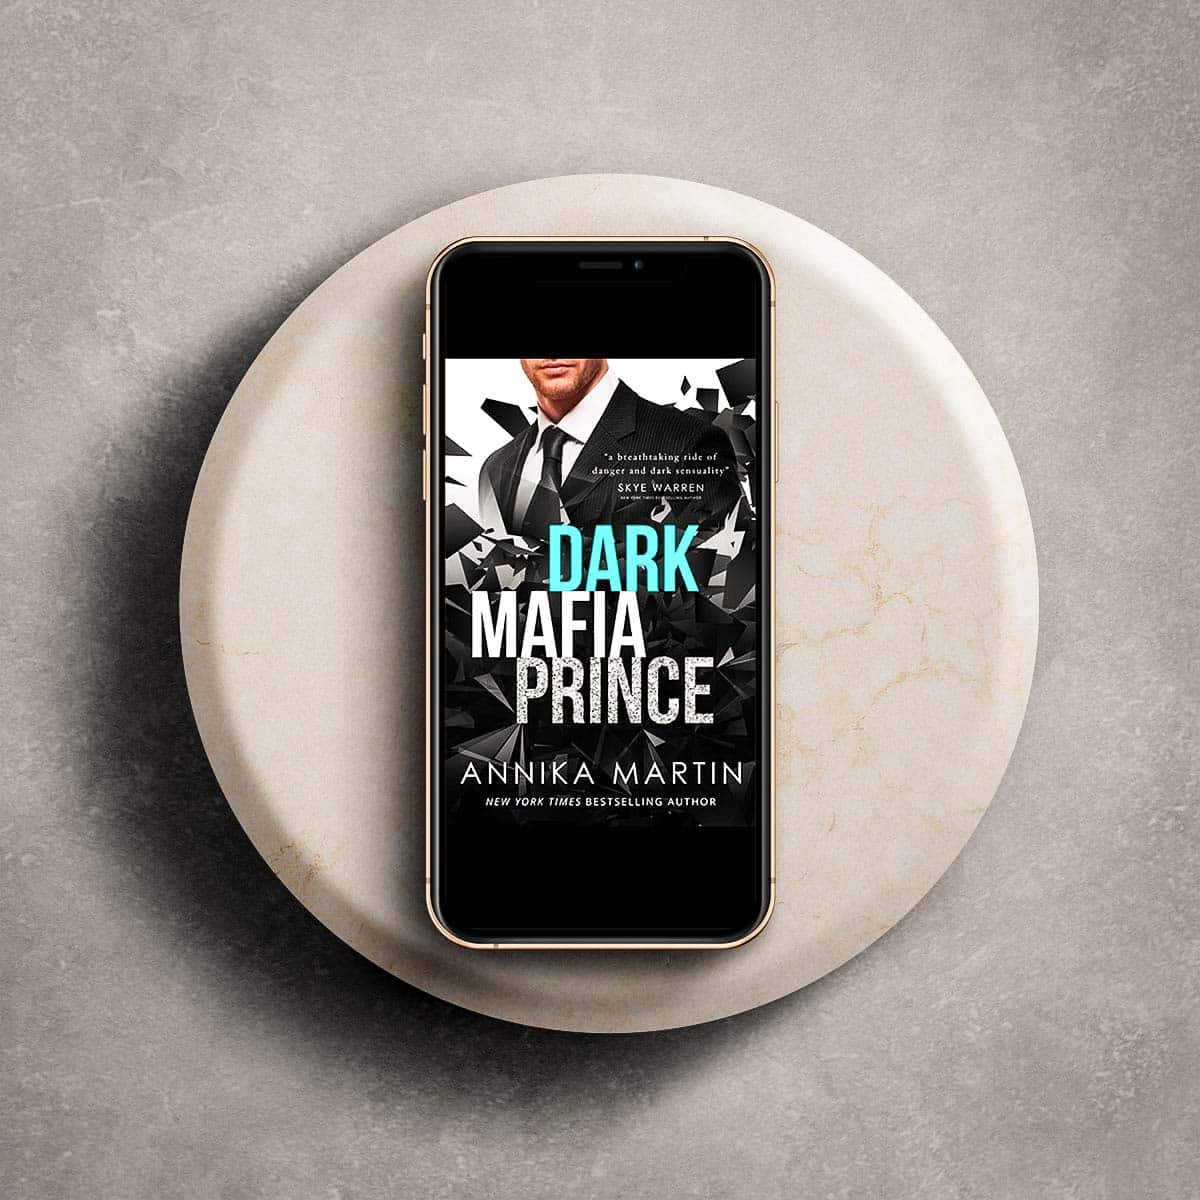 Dark Mafia Prince by Annika Martin – Dangerous Royals Book 1